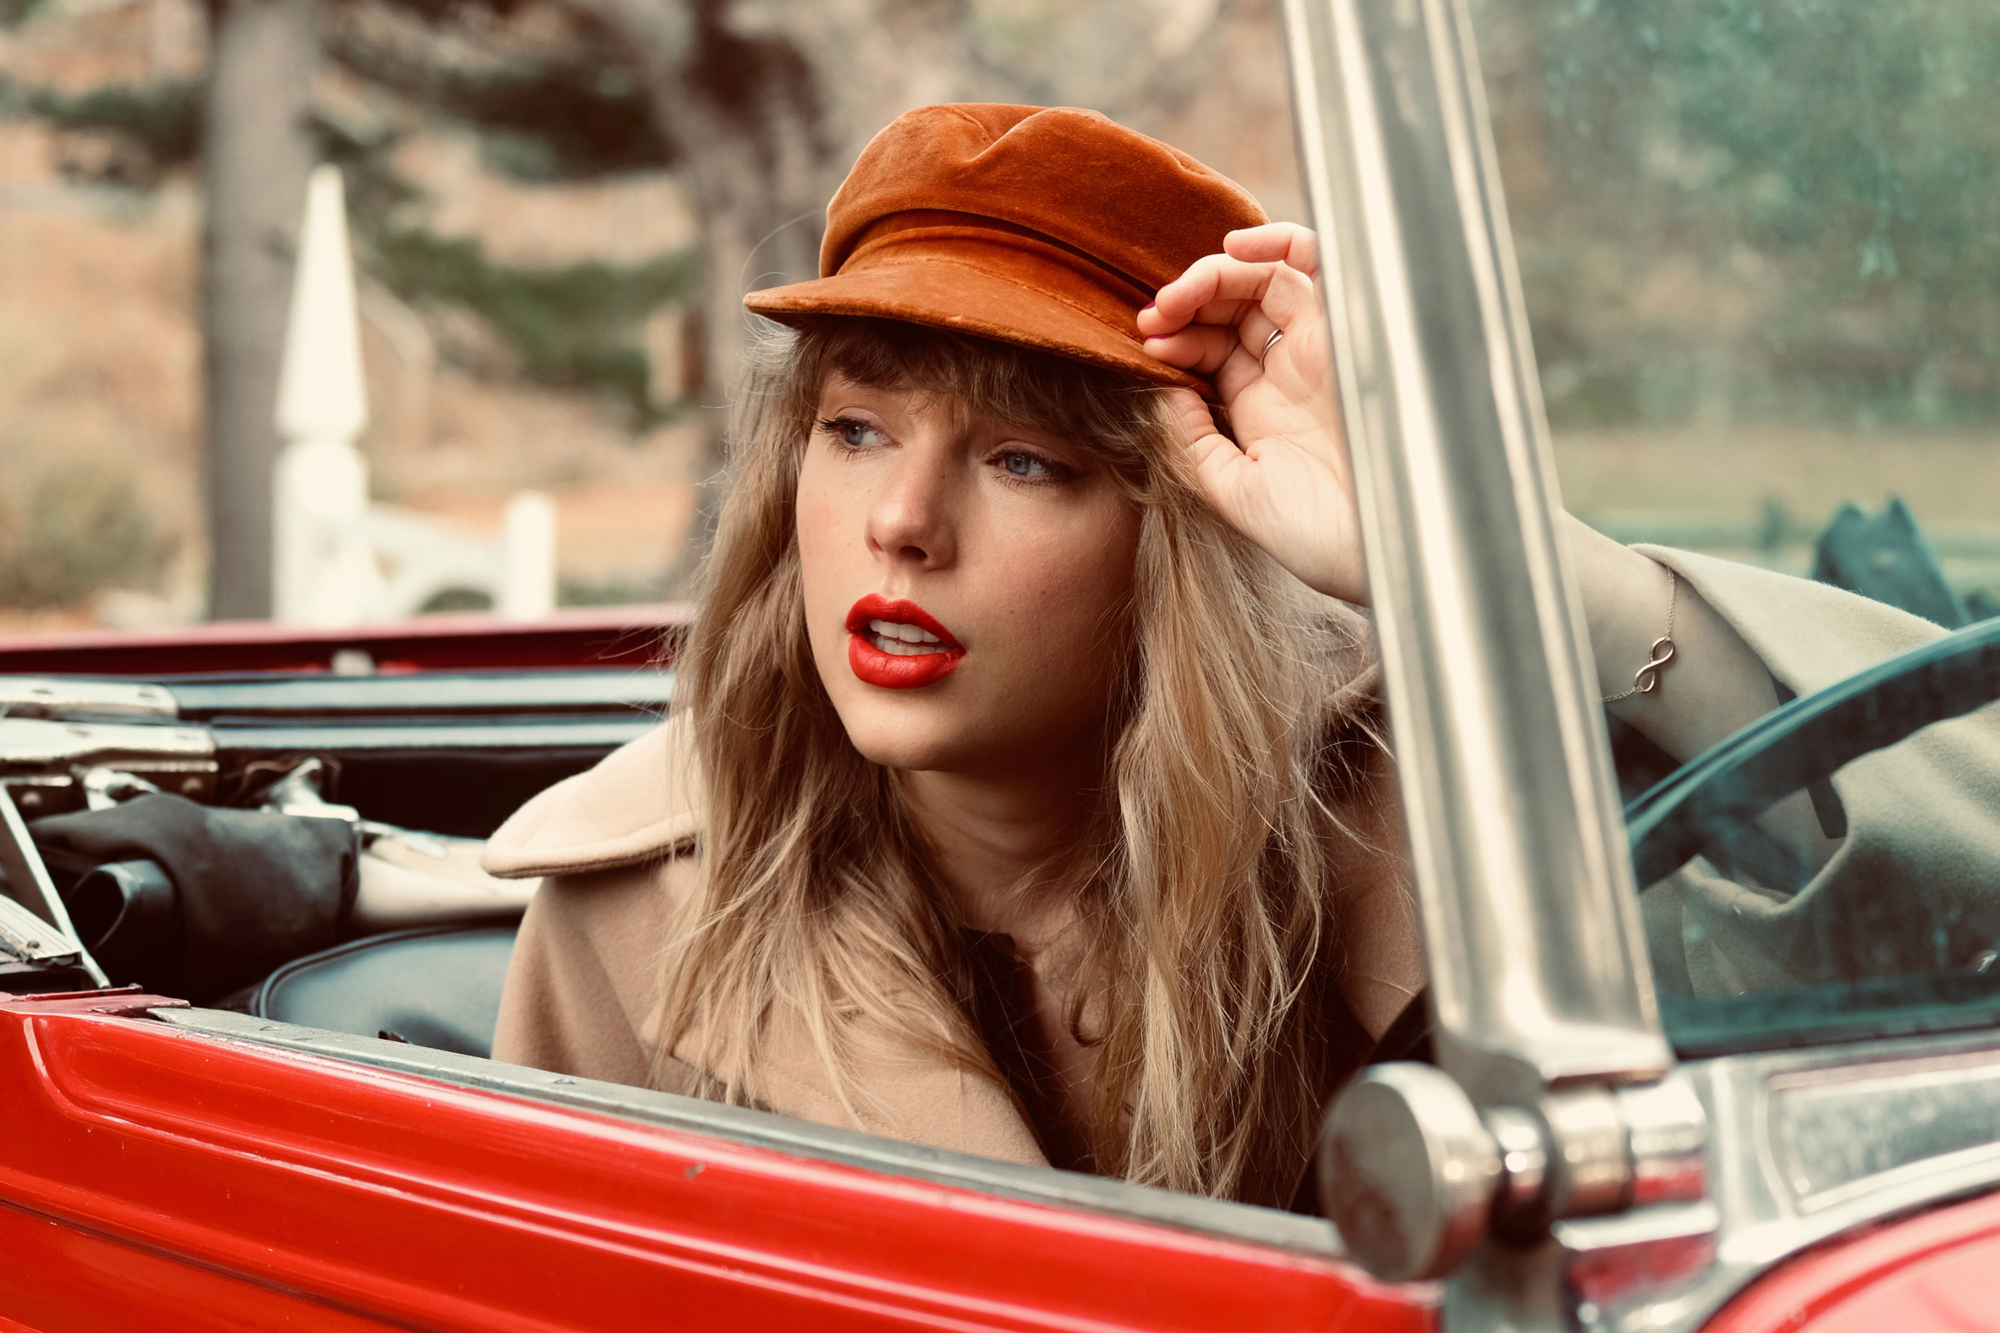 People 2000x1333 Taylor Swift women singer blonde blue eyes long hair women outdoors hat coats convertible